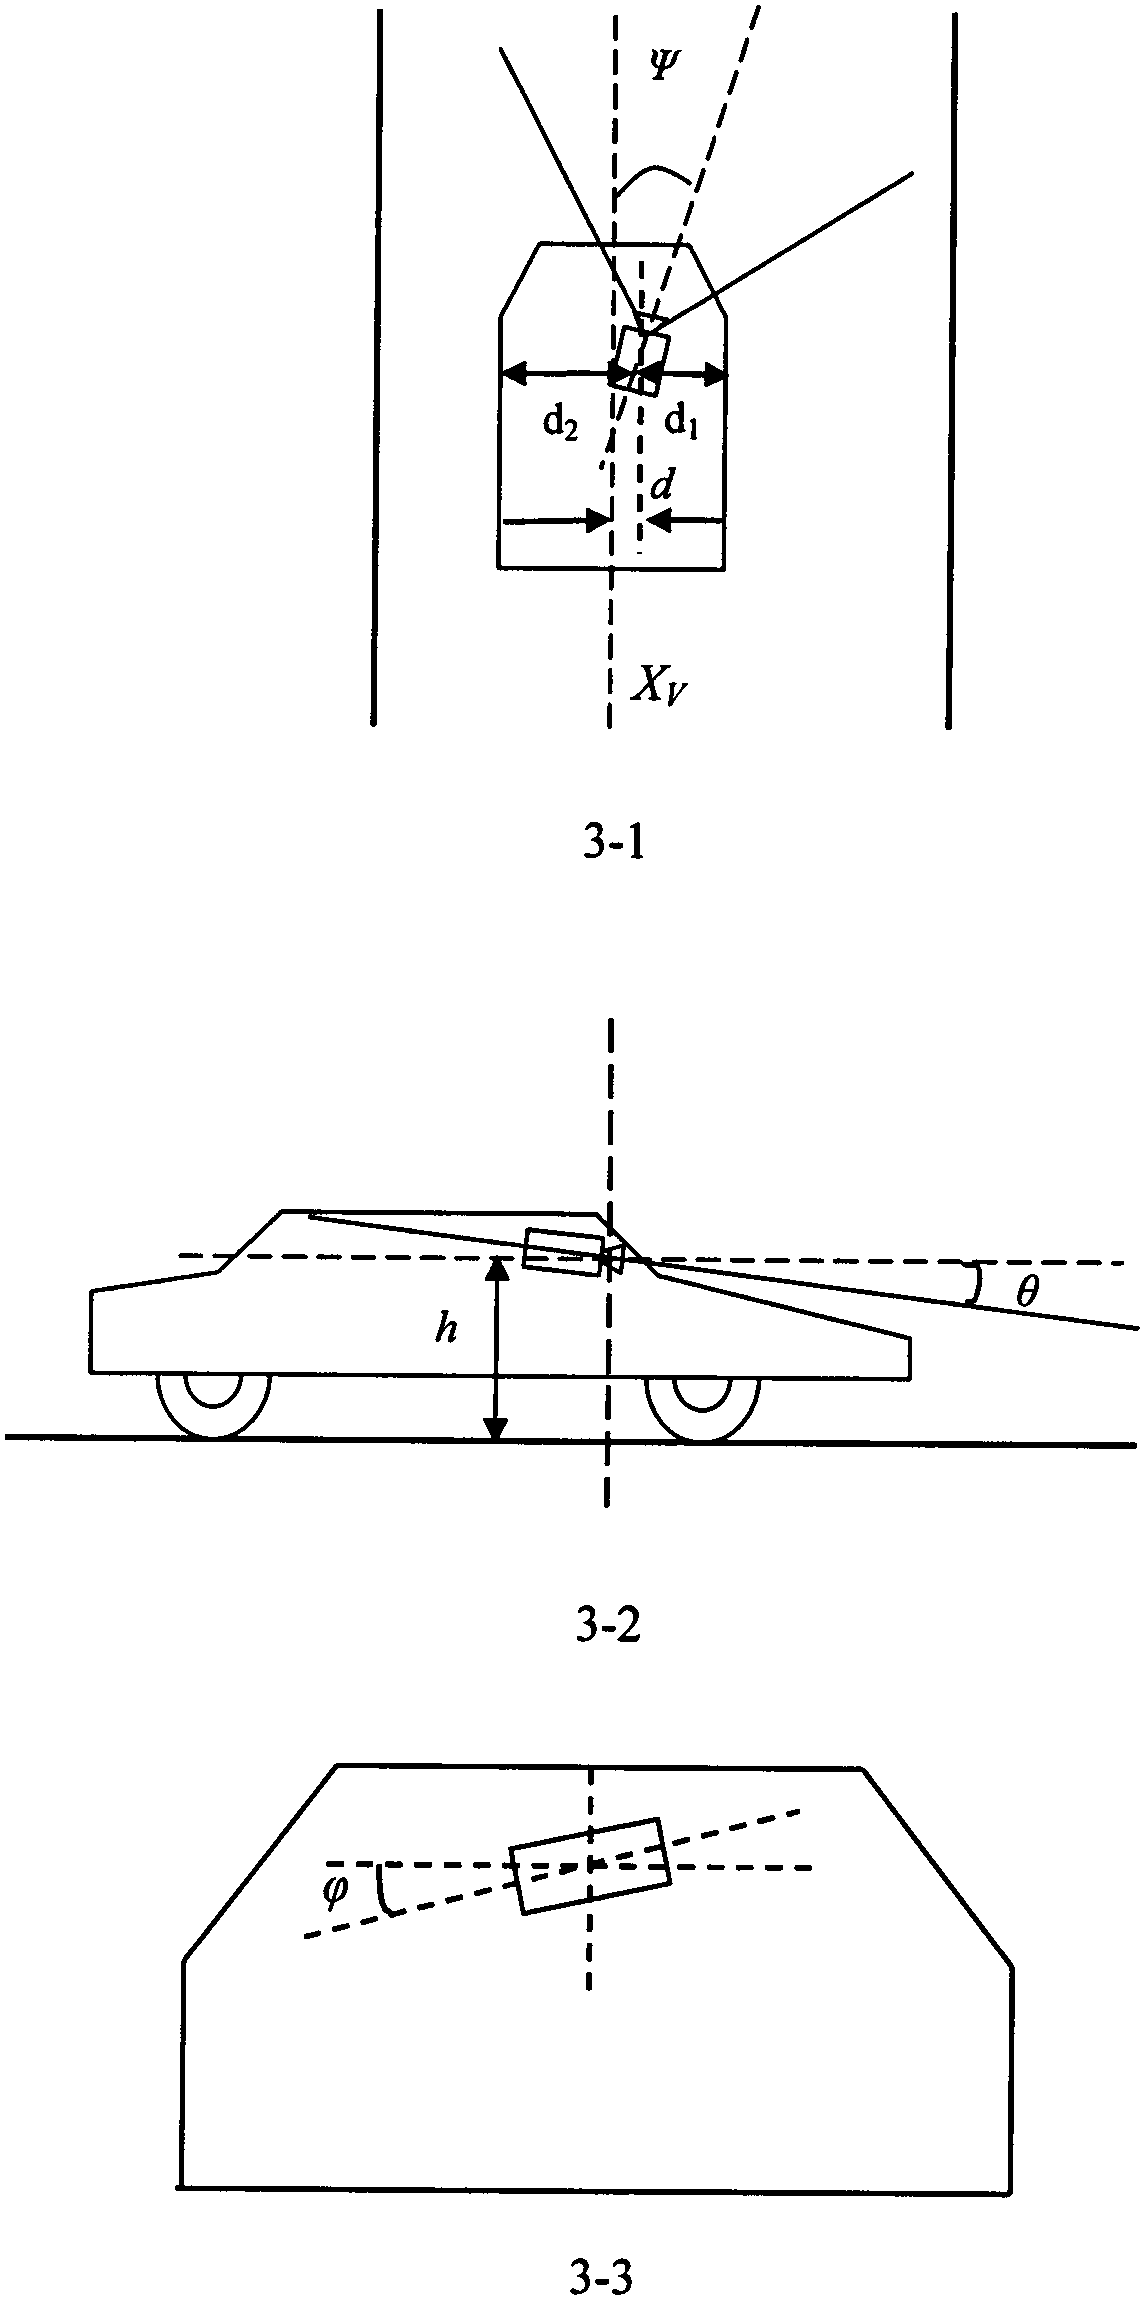 Front vehicle ranging method based on monocular vision